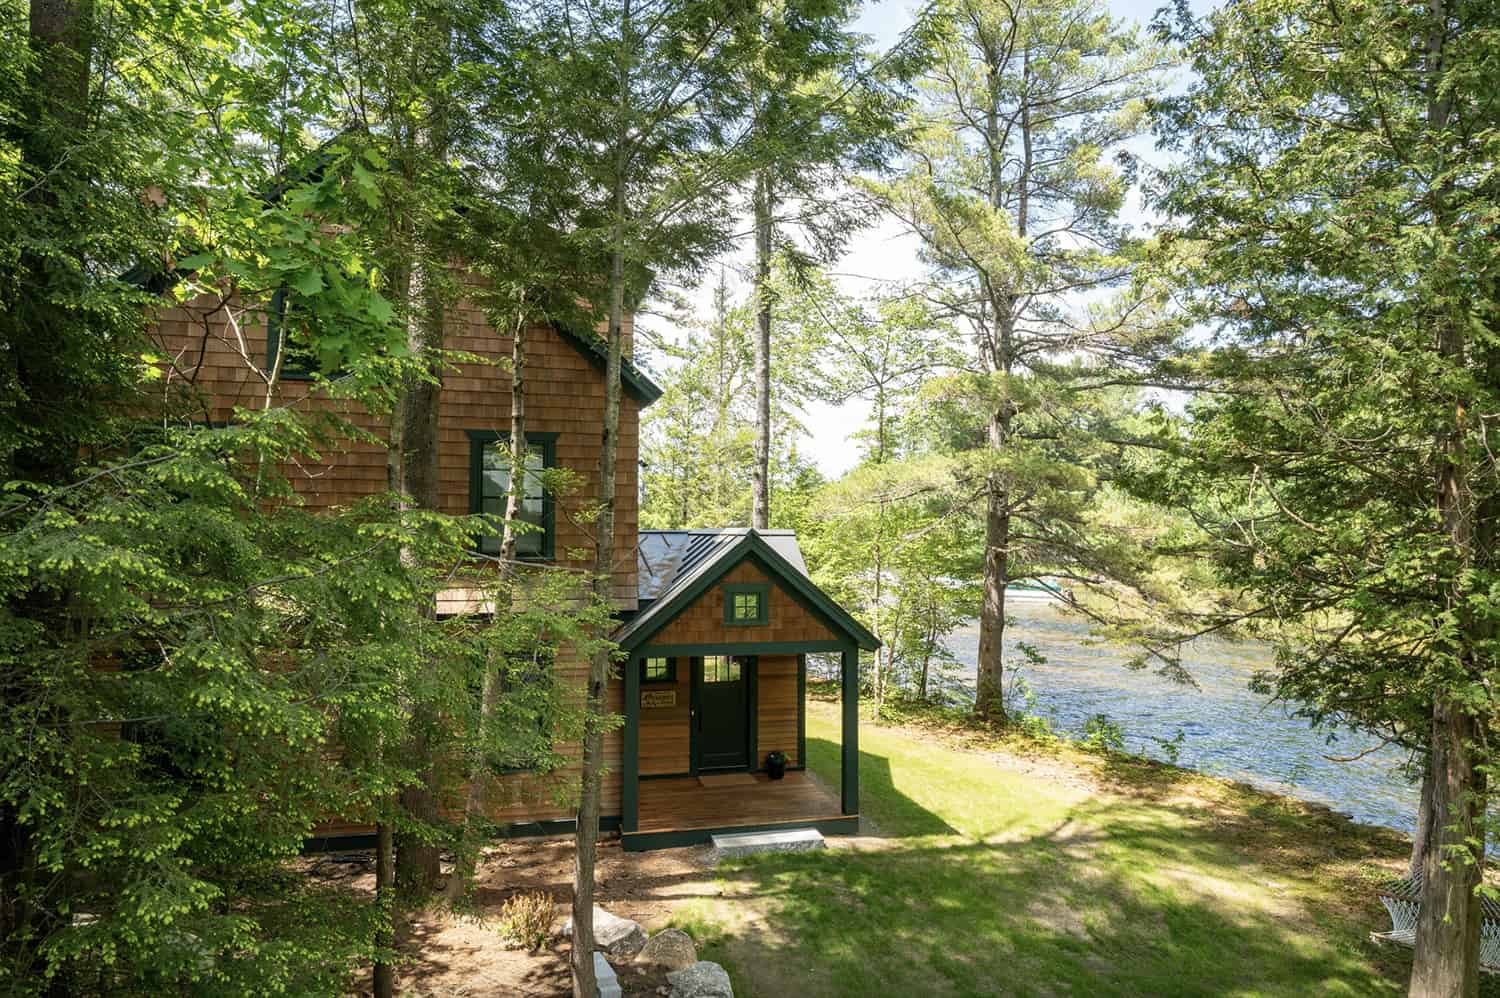 craftsman-style-lake-house-exterior